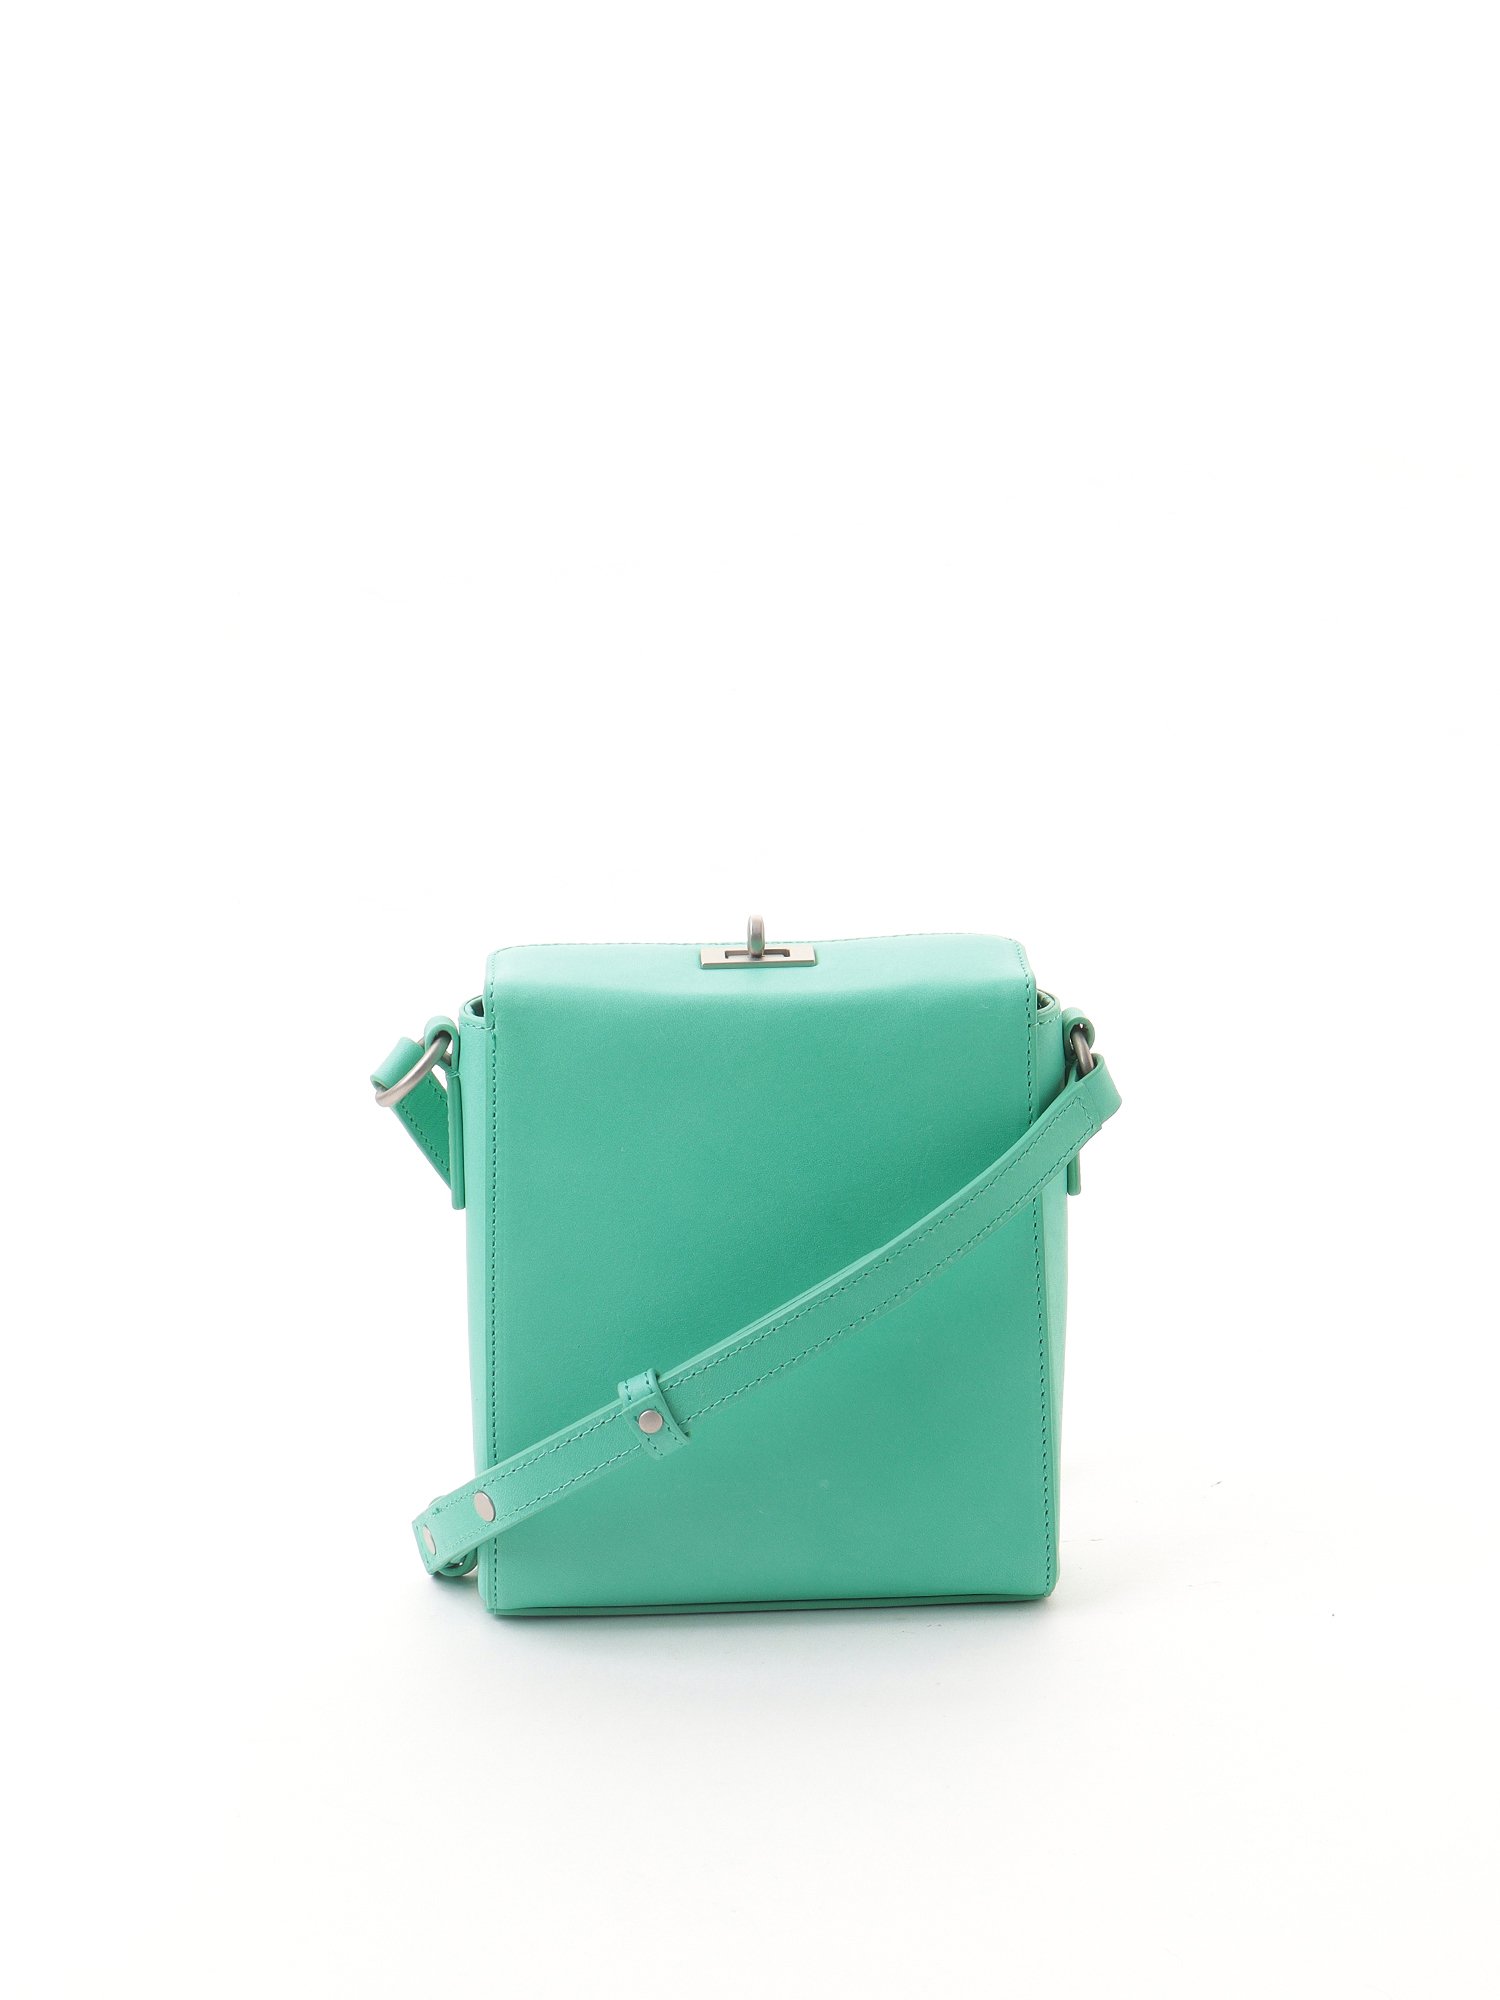 light green leather shoulder bag with twist-lock fastener | agnès b.